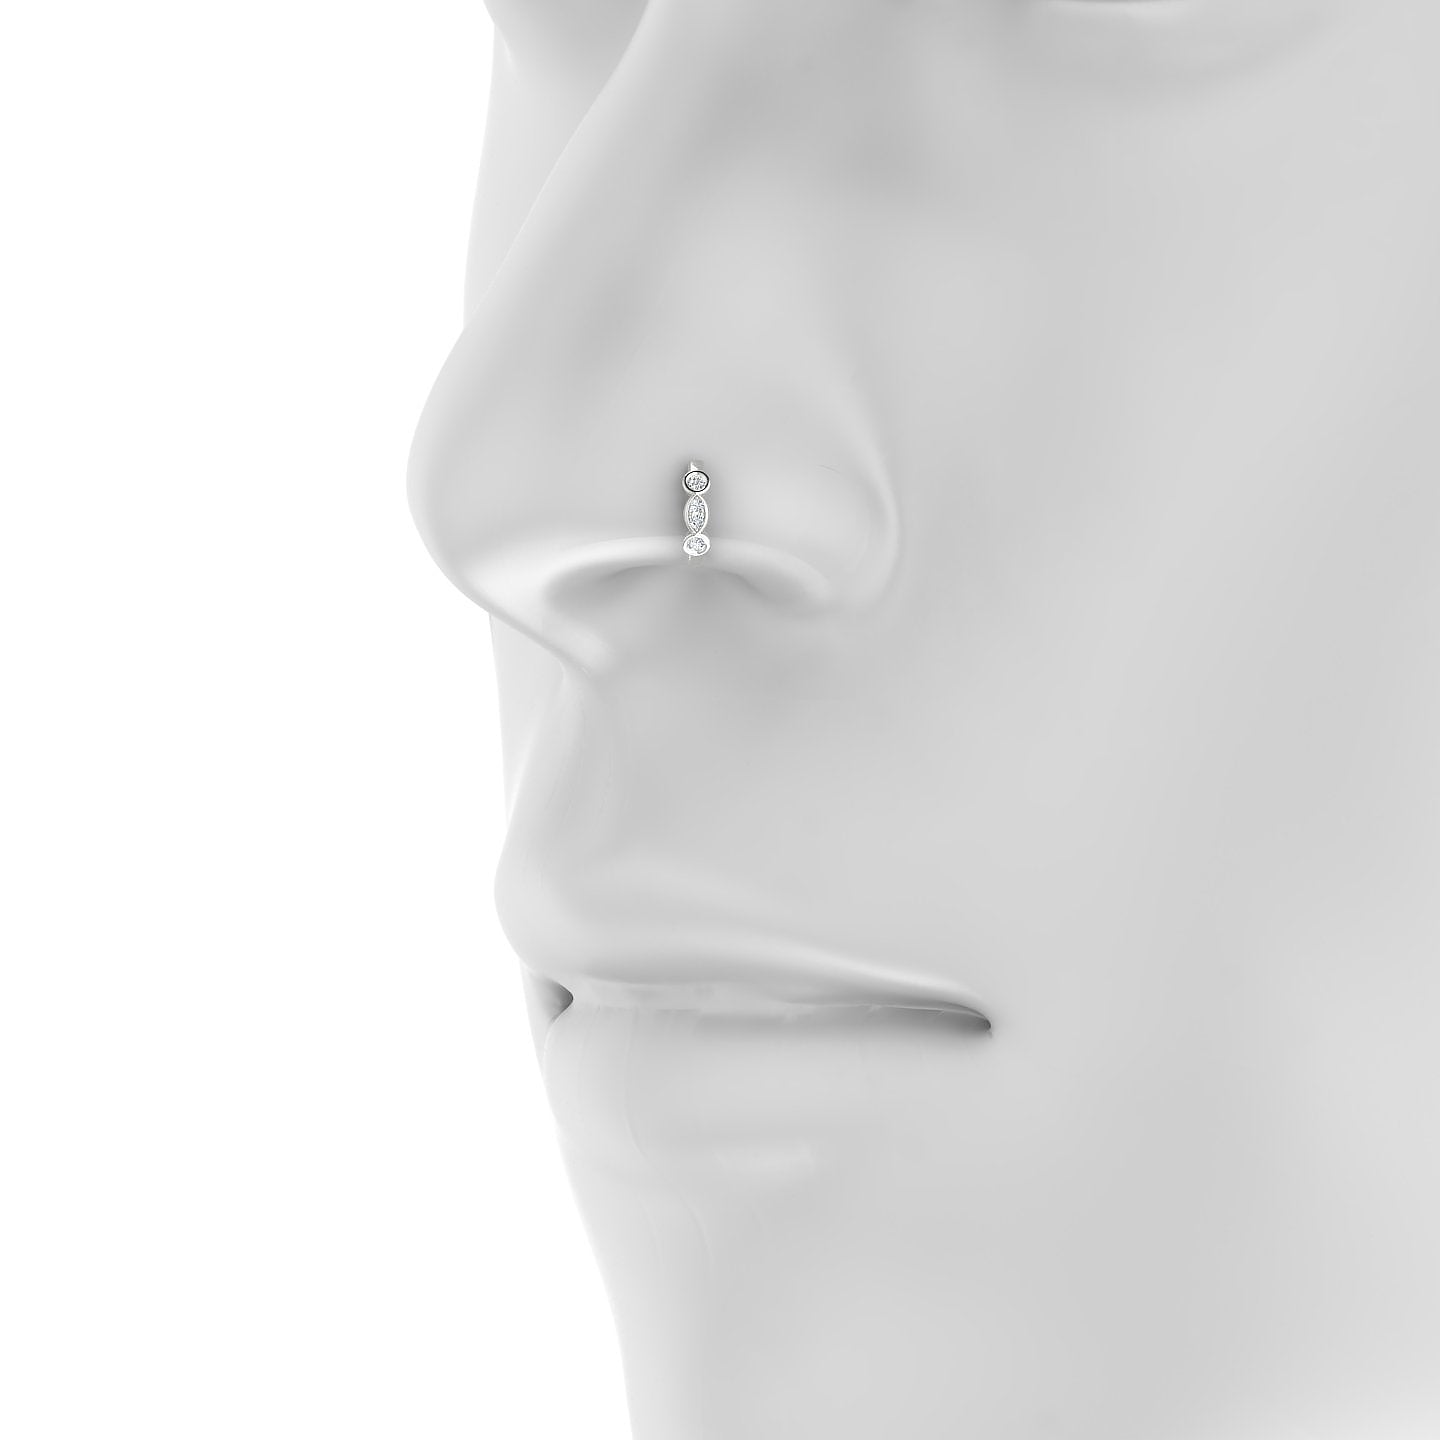 Epona | 18k White Gold 6.5 mm Diamond Nose Ring Piercing